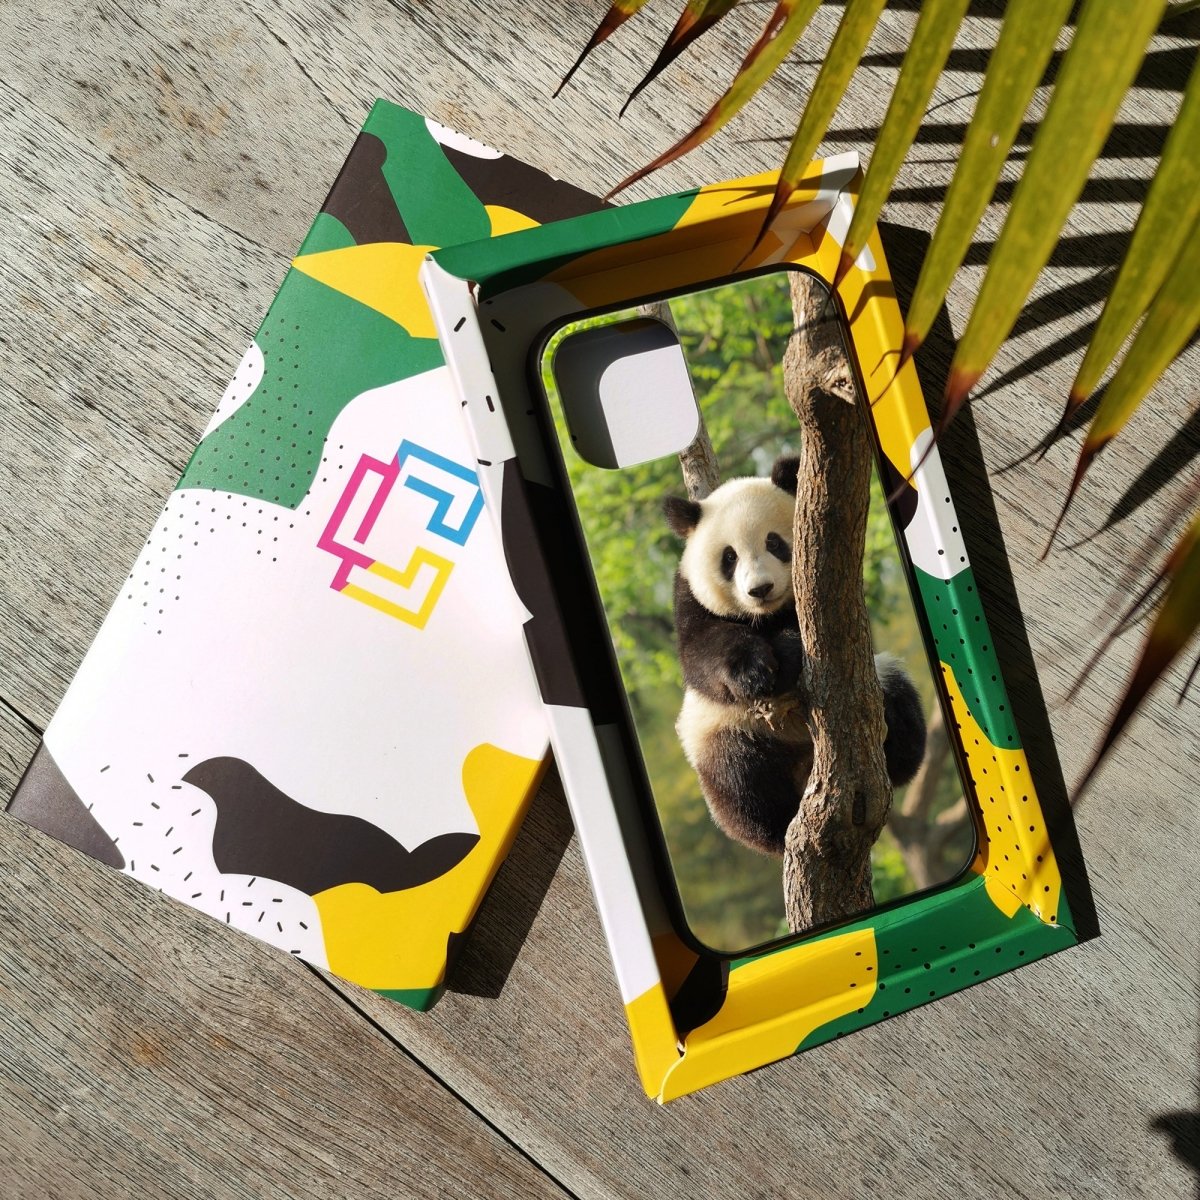 Panda - Glass Phone Case - cmzart